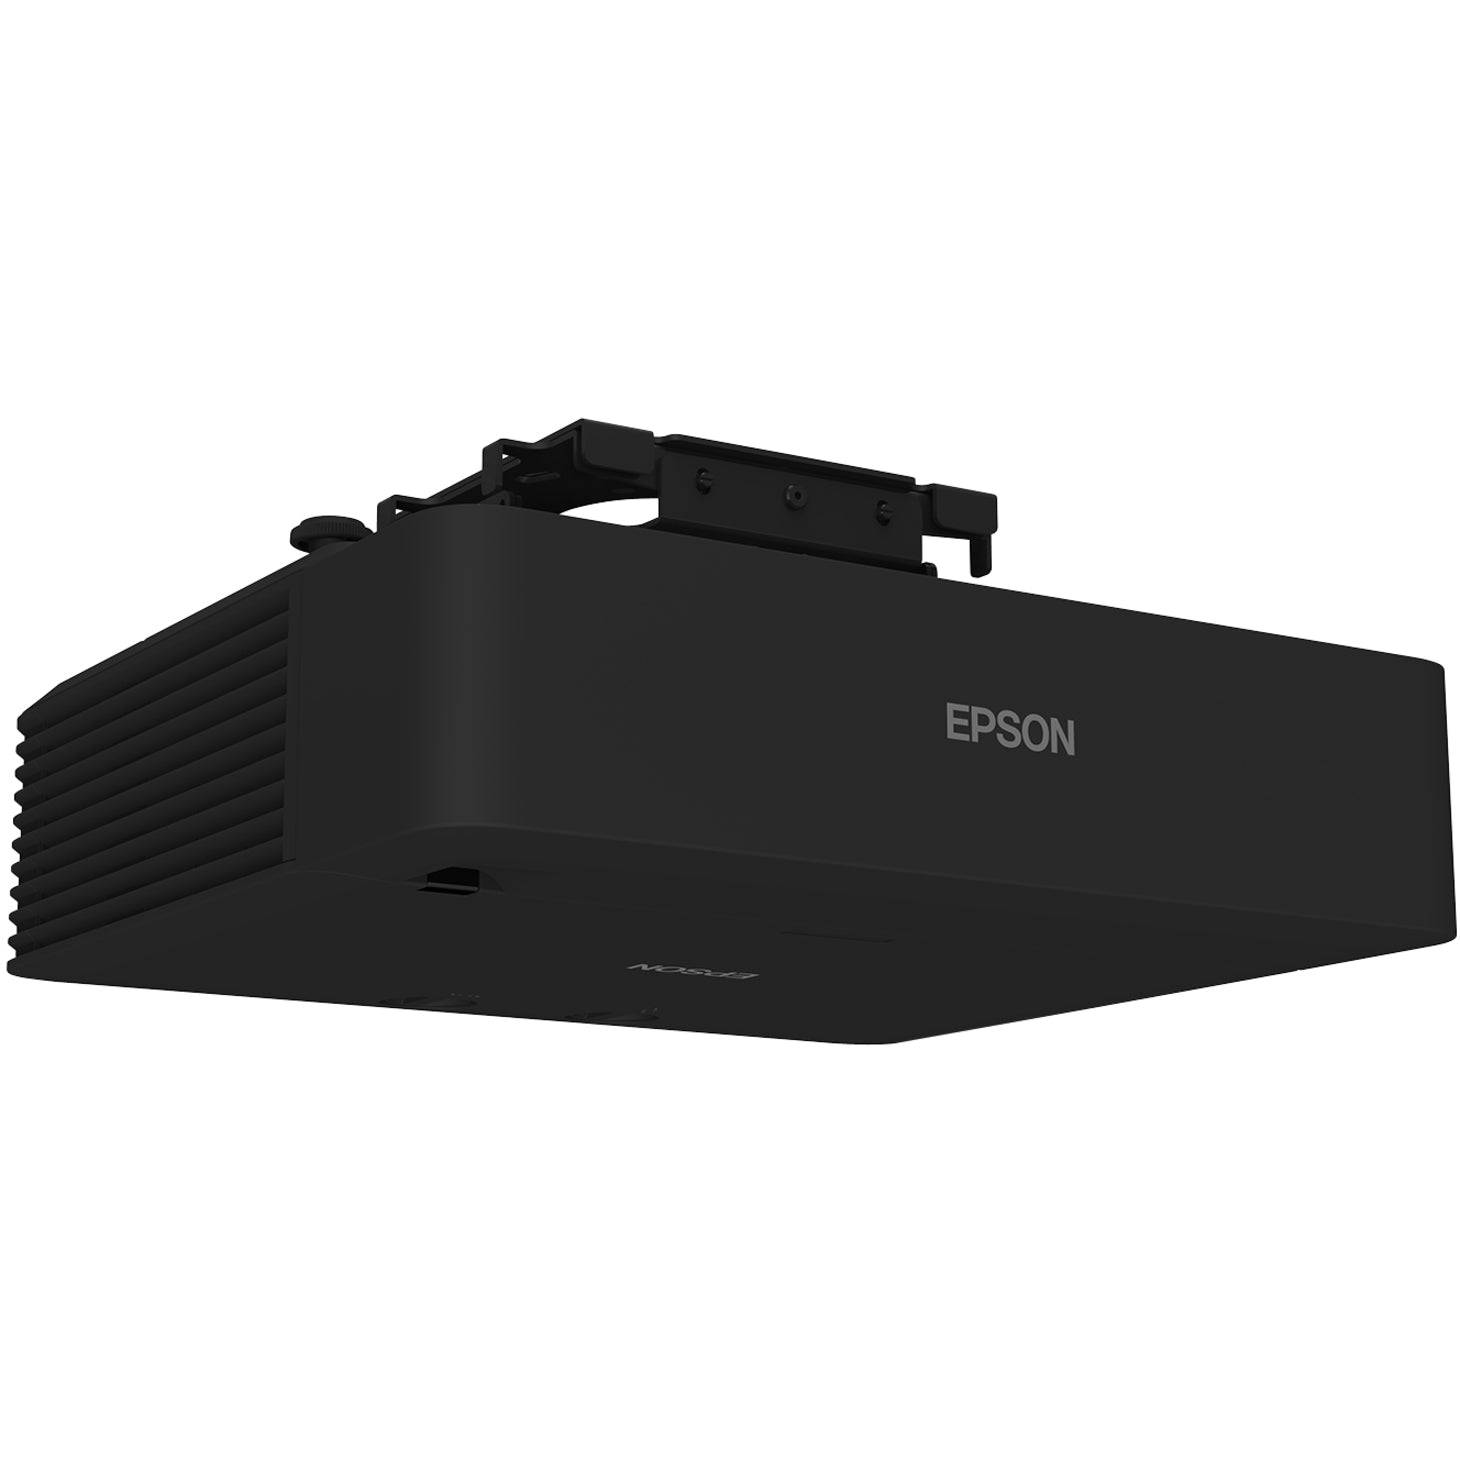 Epson V11HA25120 PowerLite L735U 3LCD Projector, 7000 lm, Long Throw, Wireless LAN